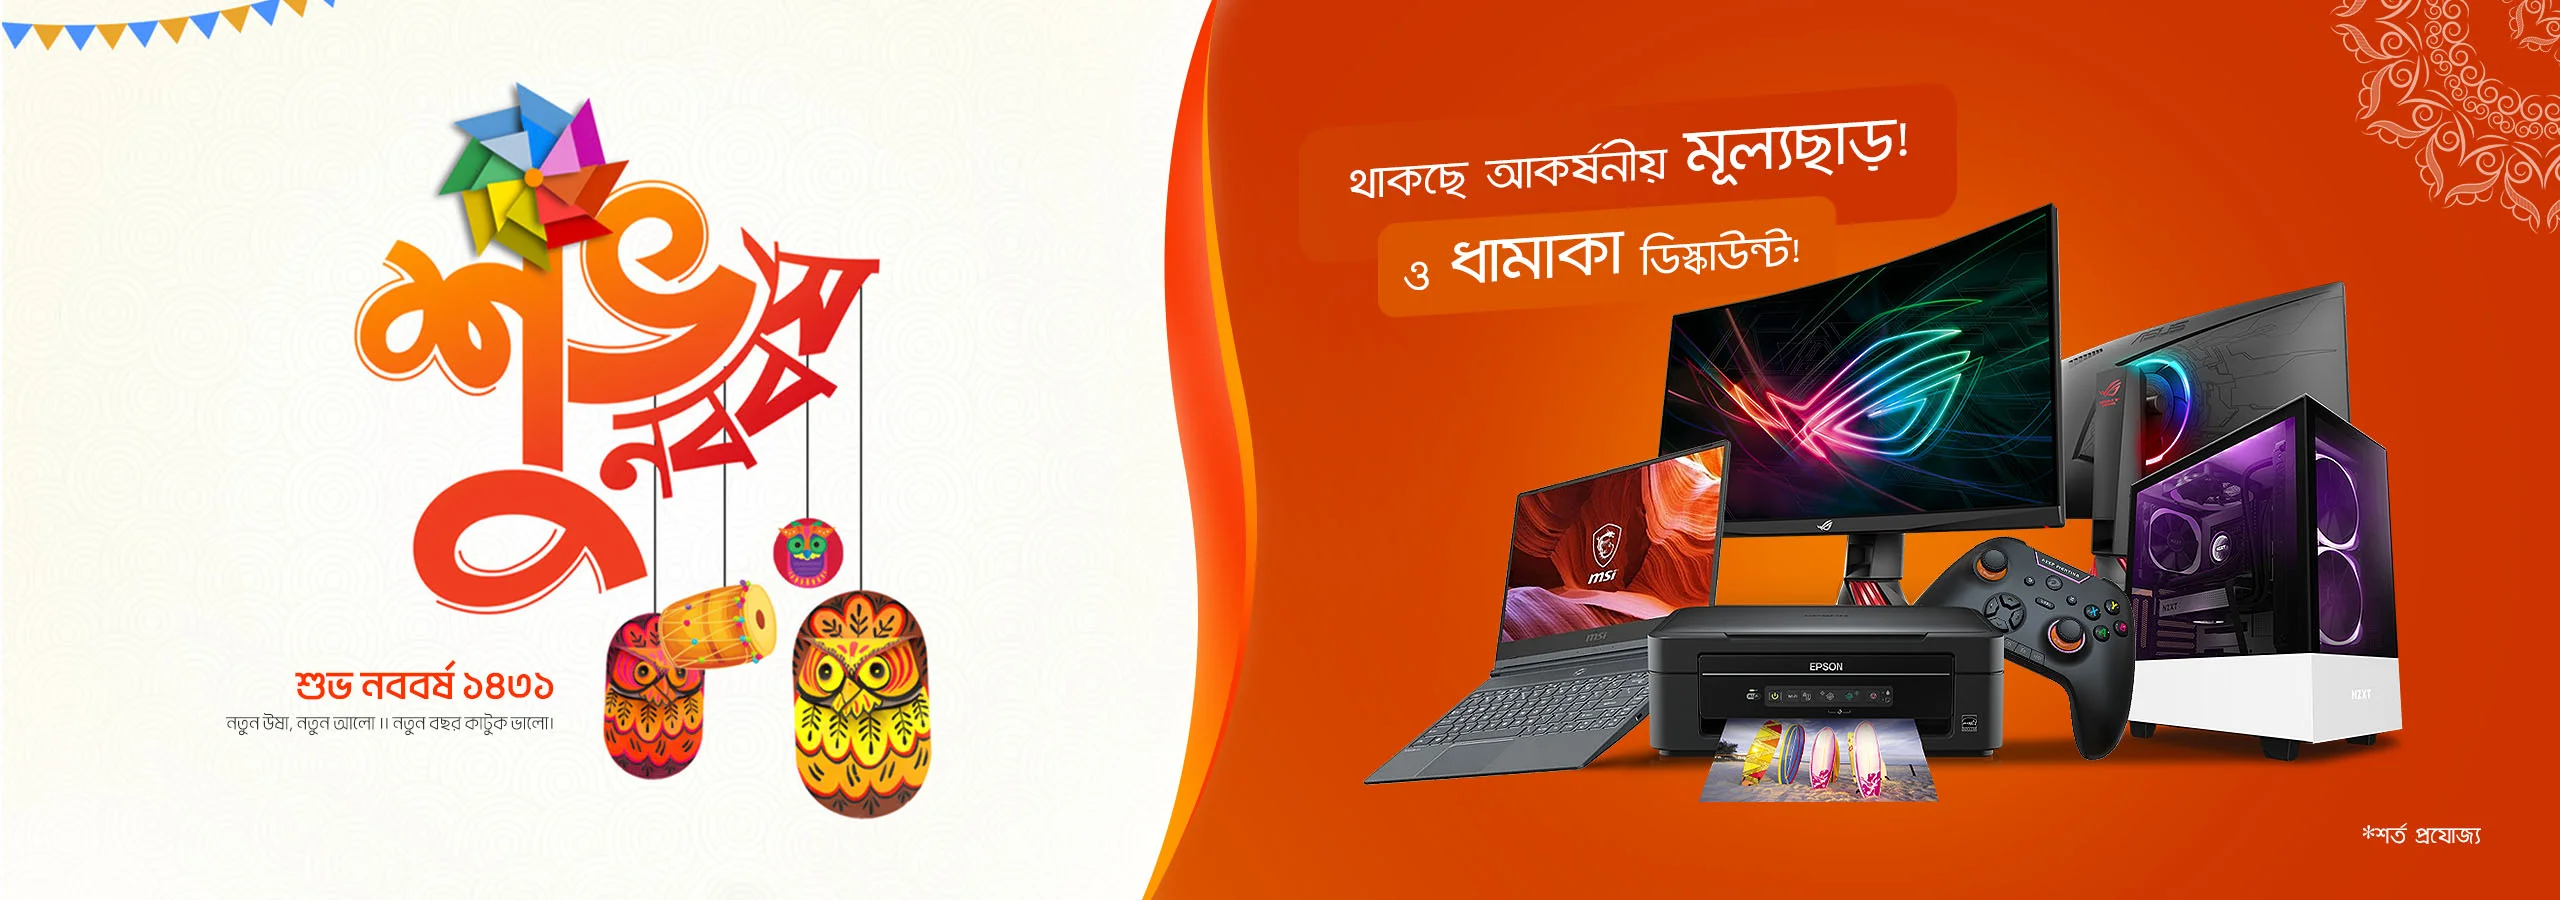 web banner for Bangla new year